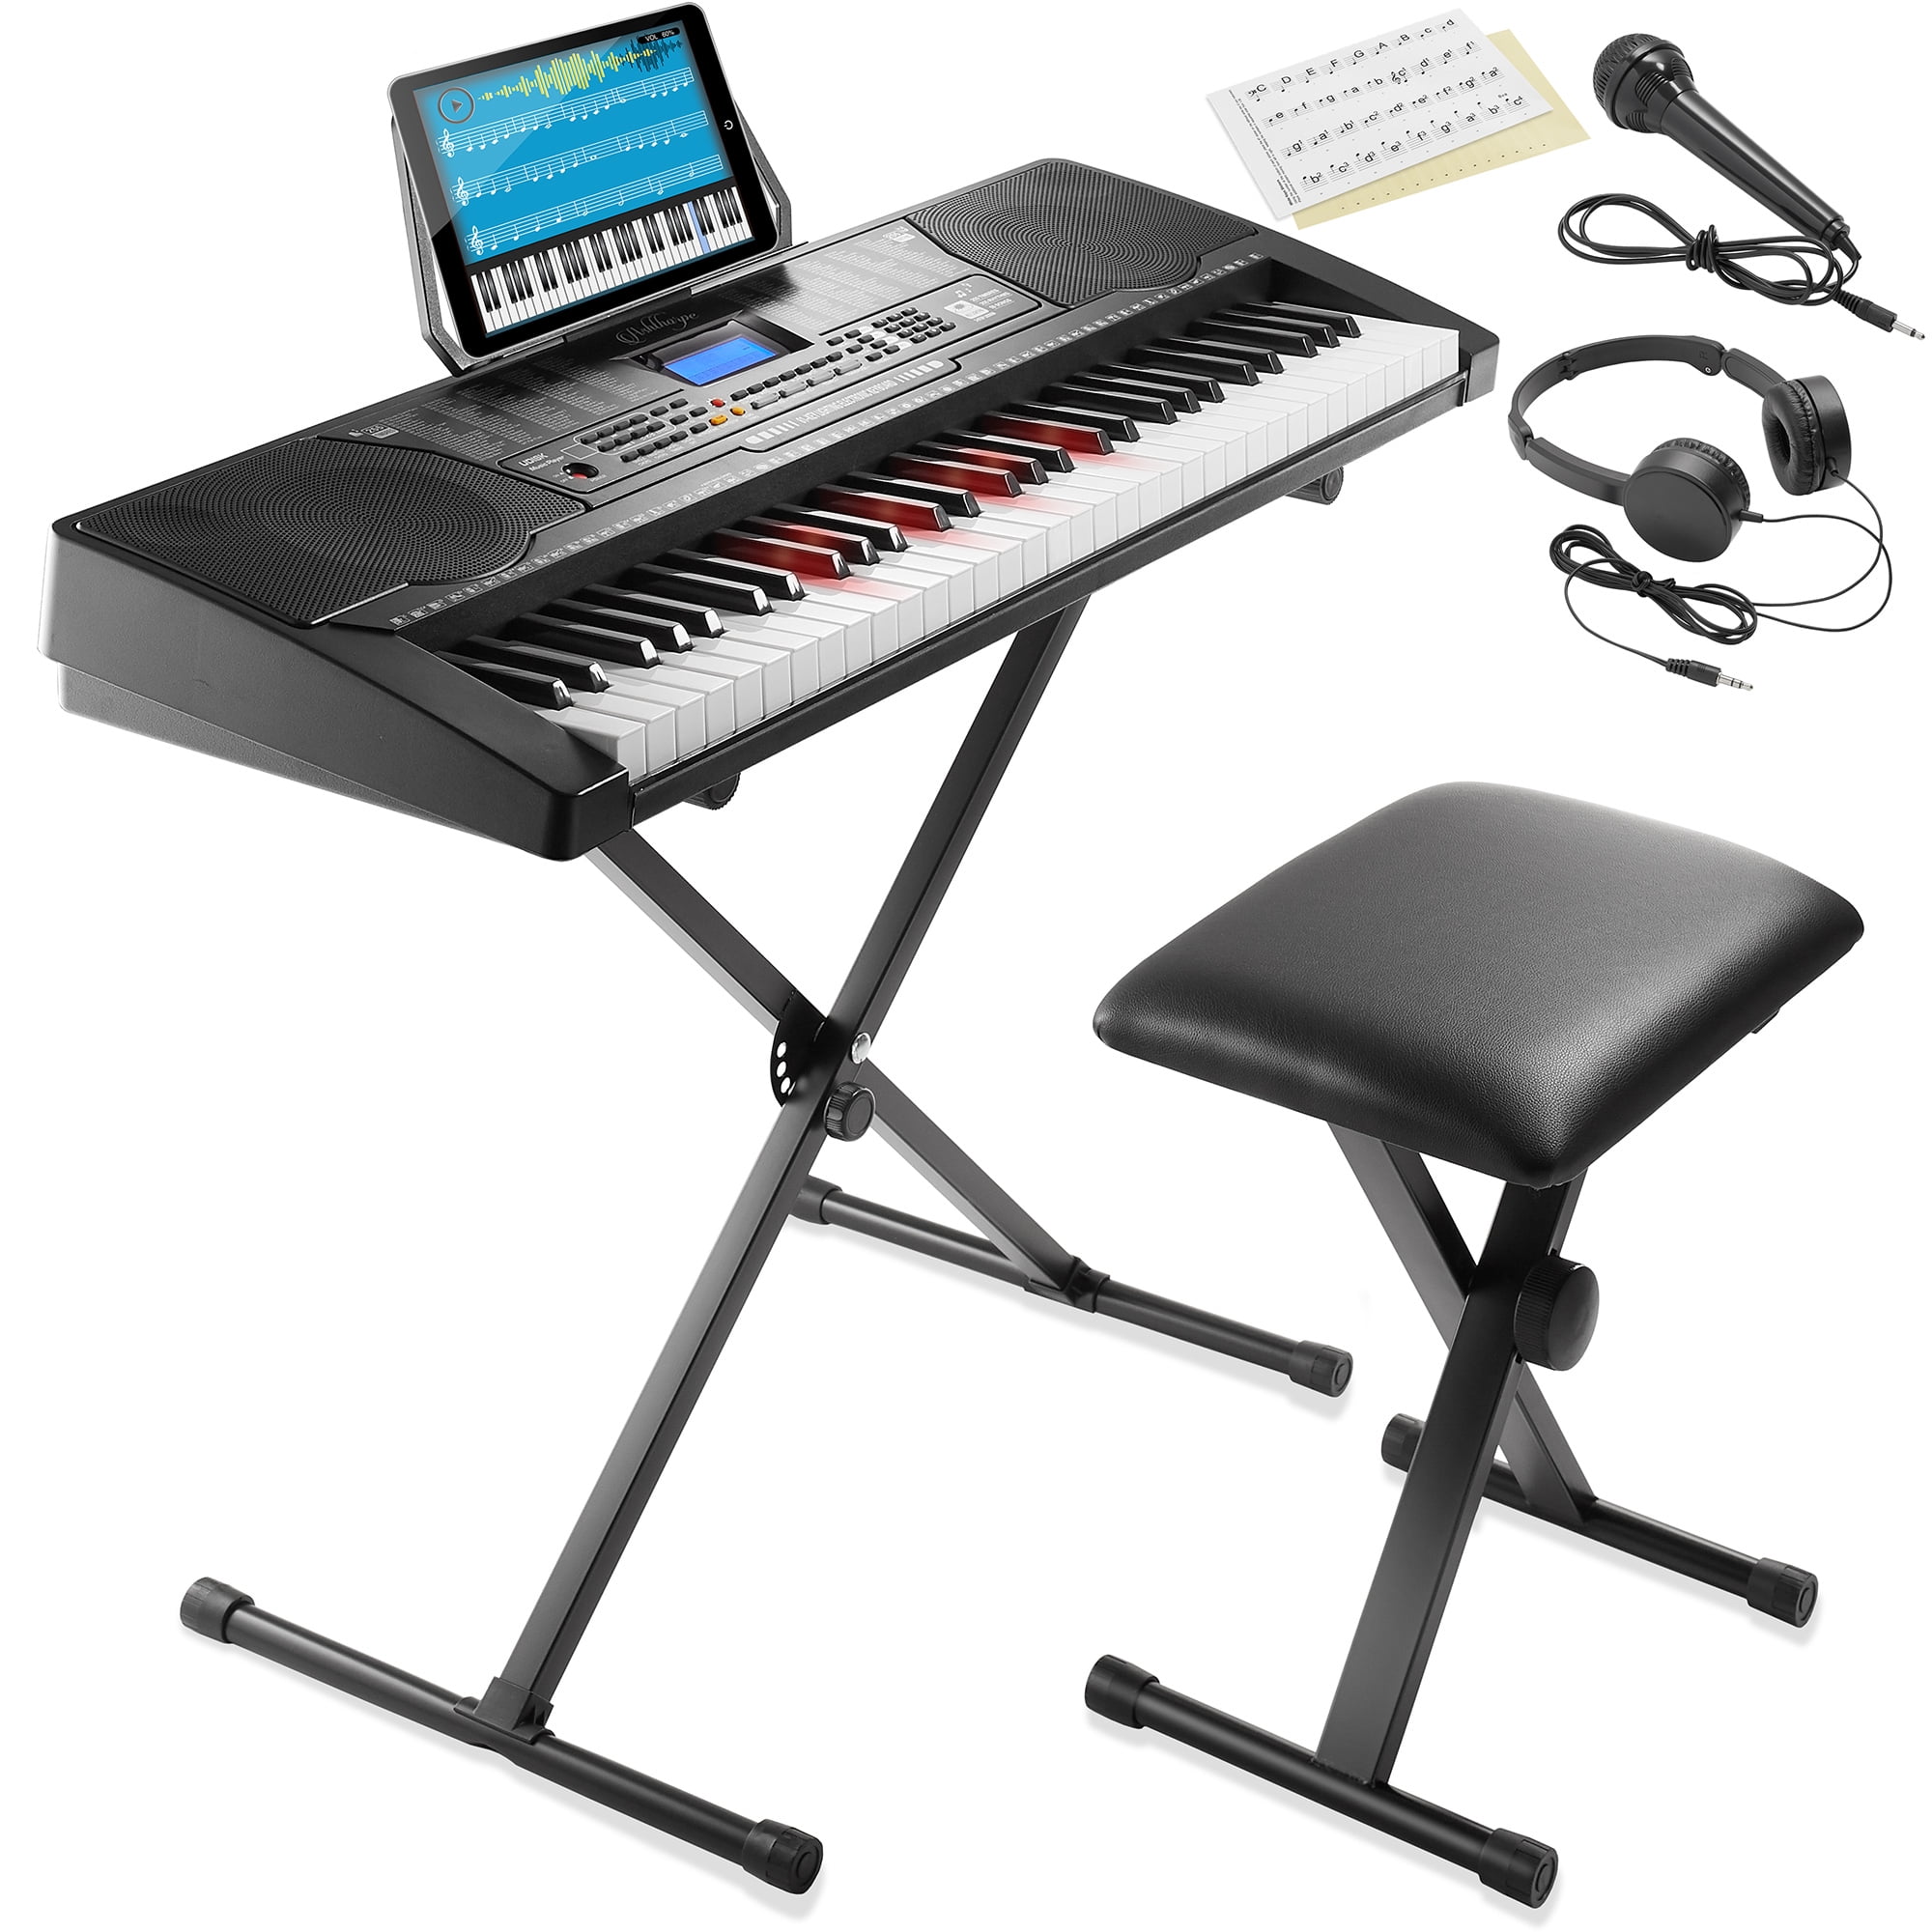 61 Key Digital Keyboard Multifunktionstastatur mit Mikrofon E-Piano Einsteiger 